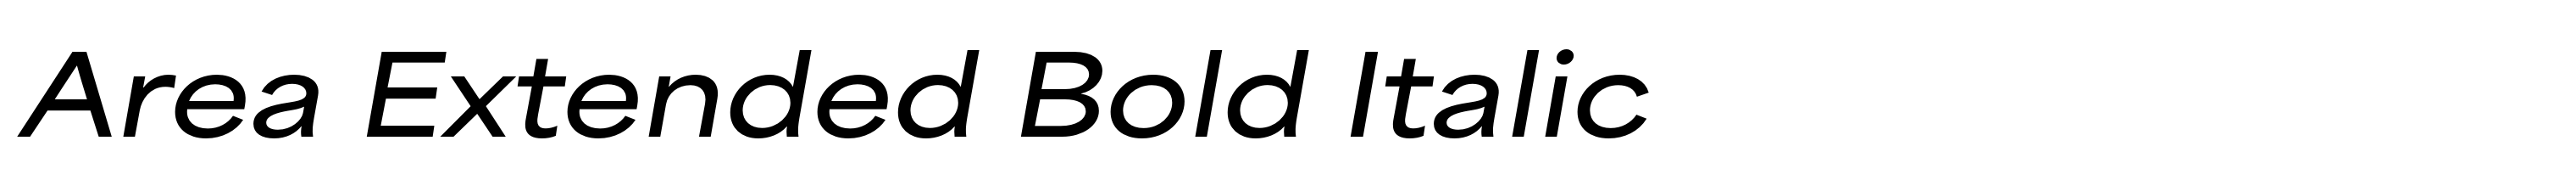 Area Extended Bold Italic